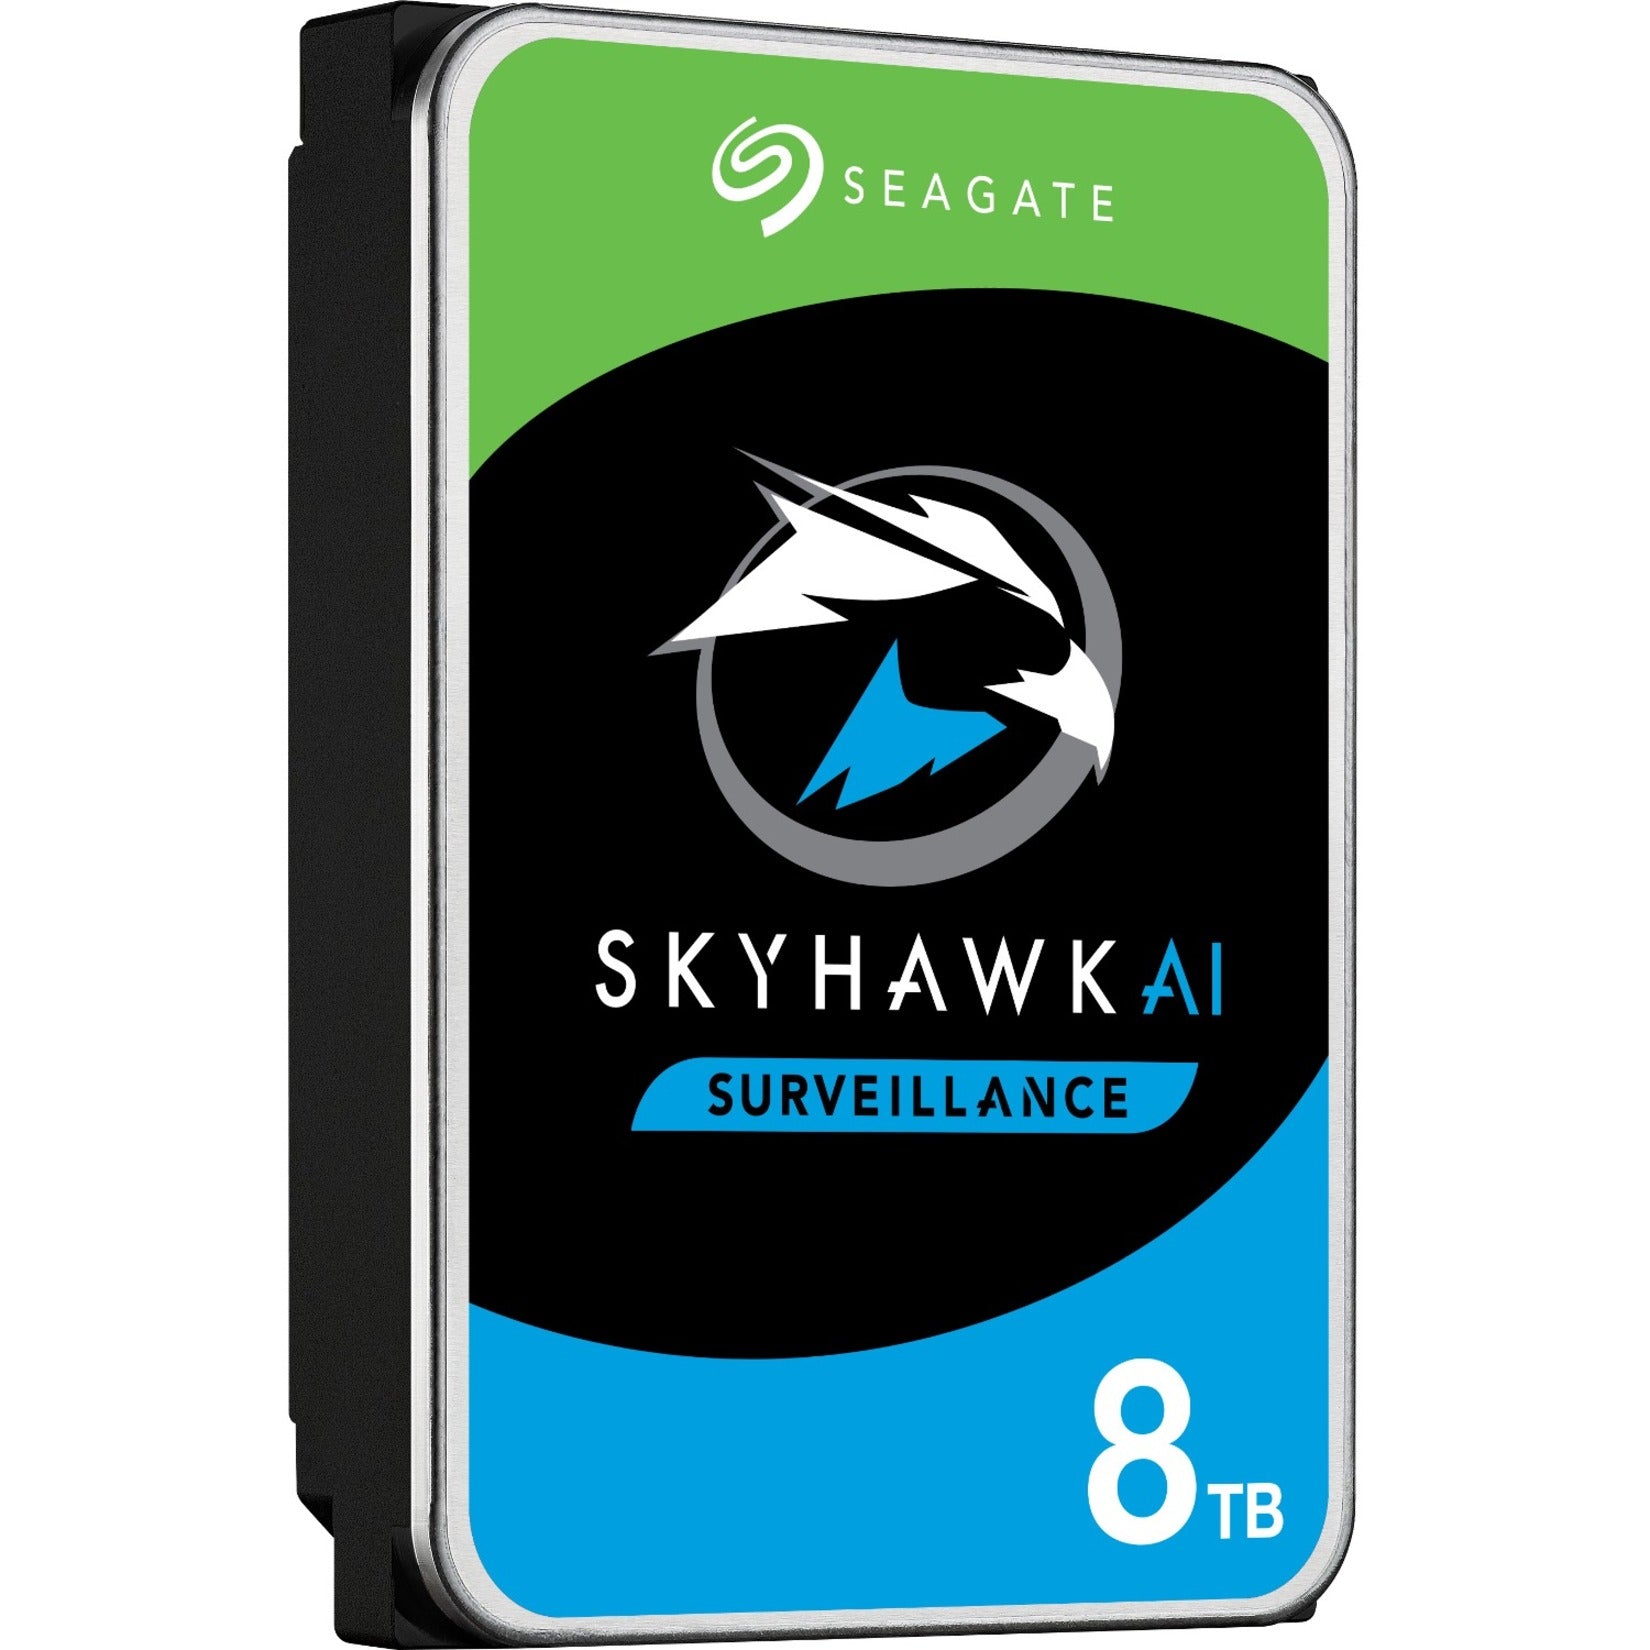 Seagate ST8000VE001 SkyHawk AI 8TB Hard Drive, 24x7 Surveillance Storage